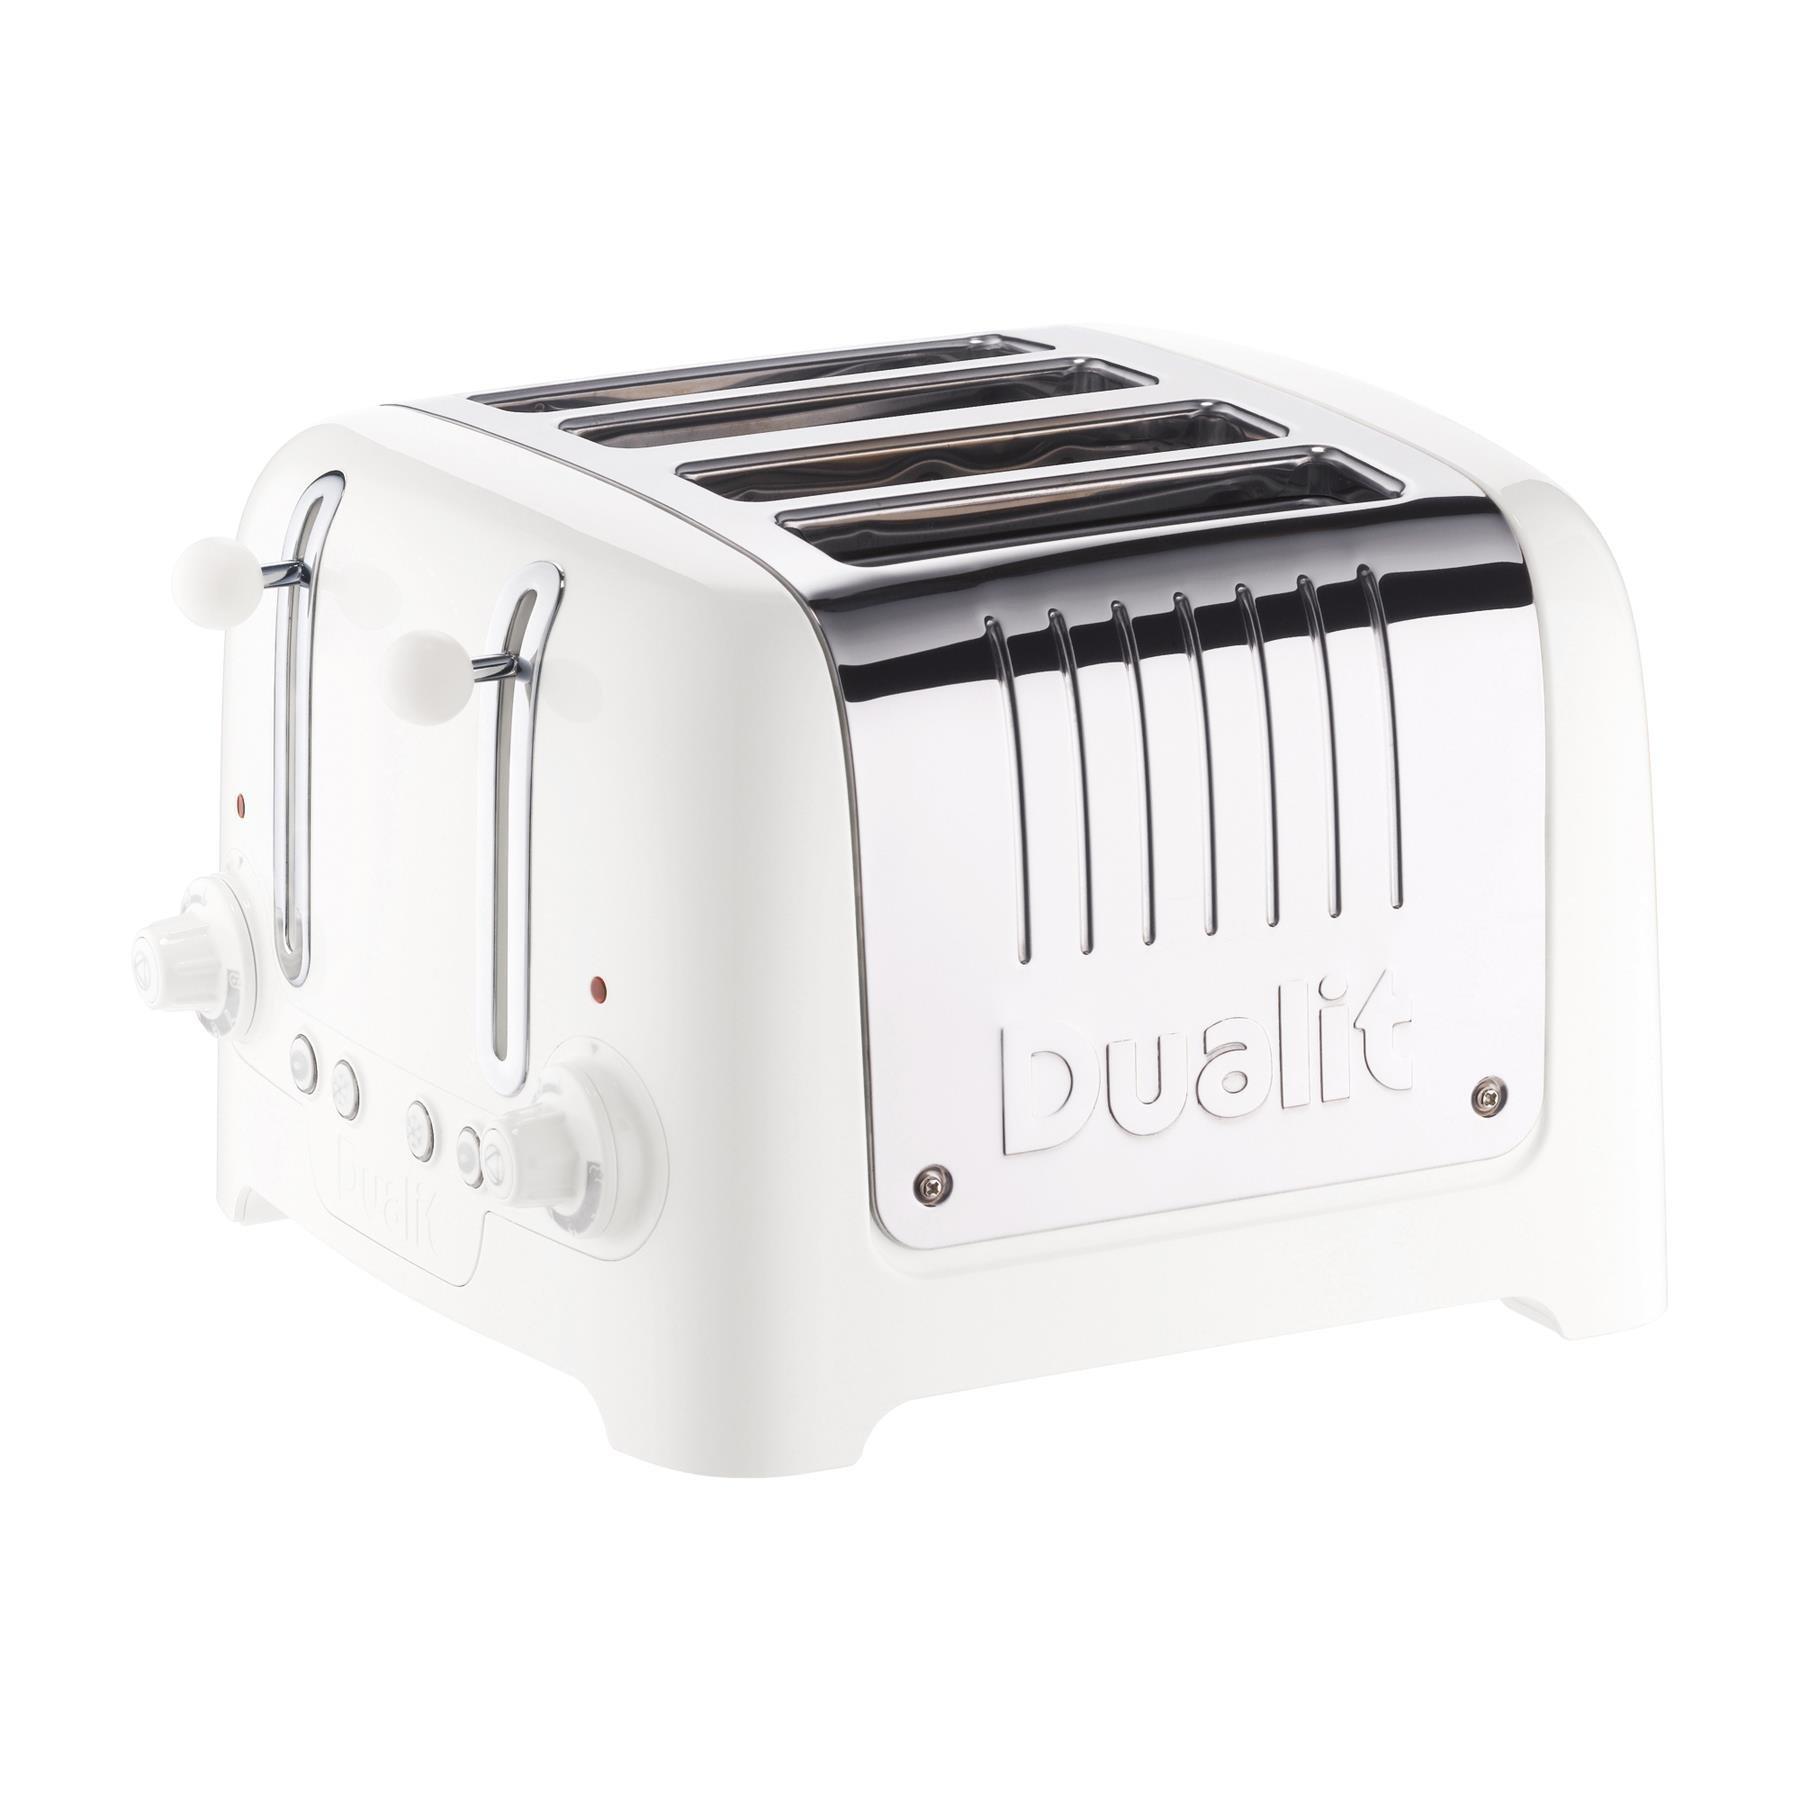 4 Sllice Toaster